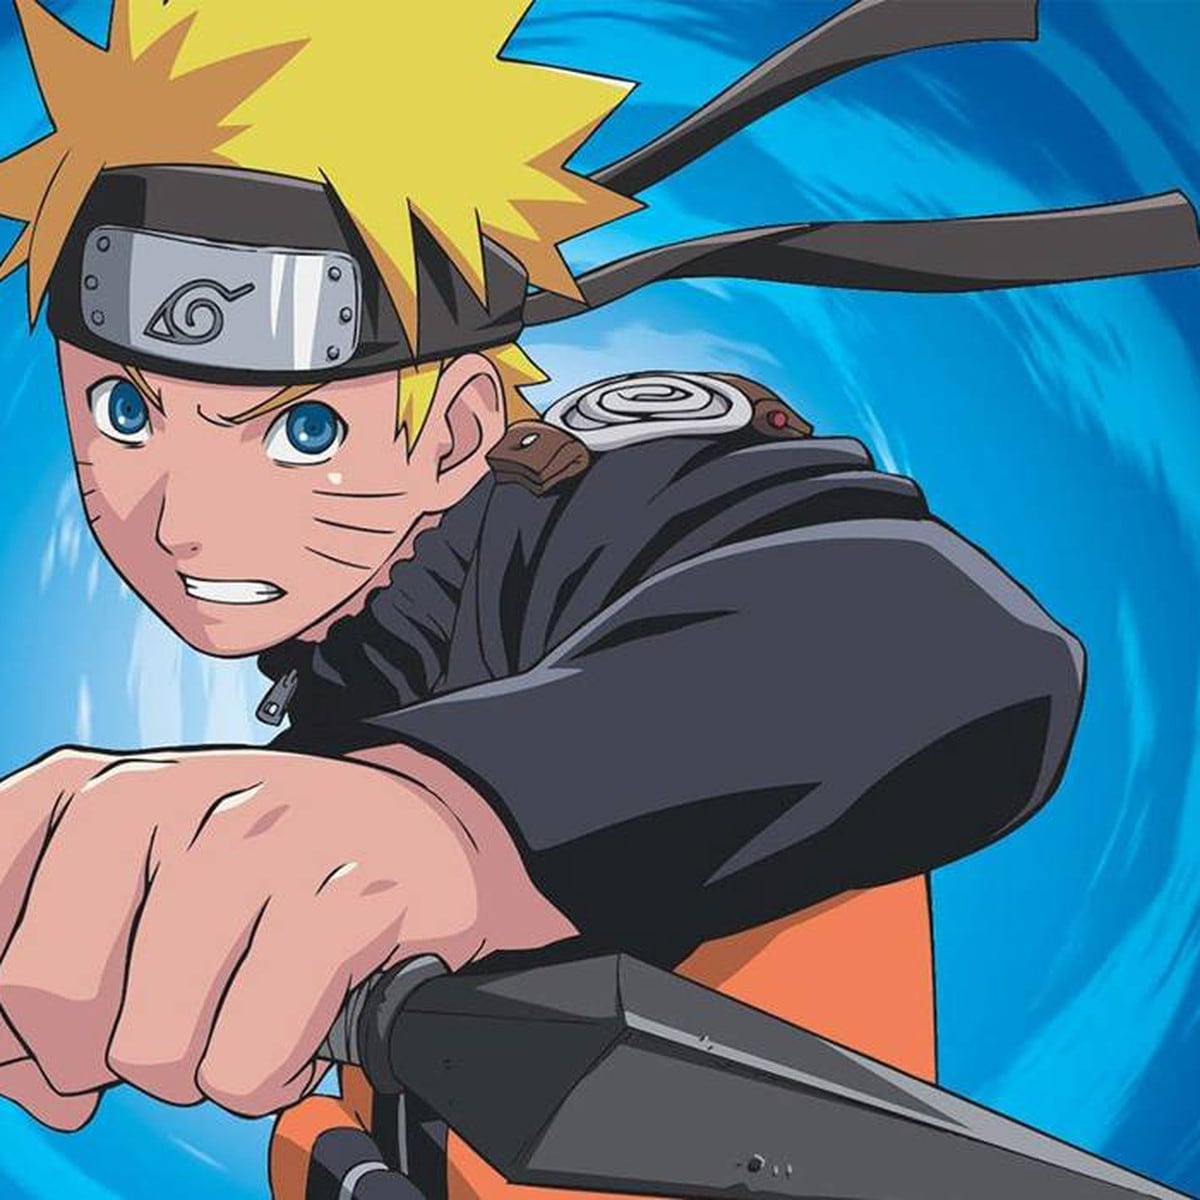 Naruto: Shippûden - Ver la serie de tv online